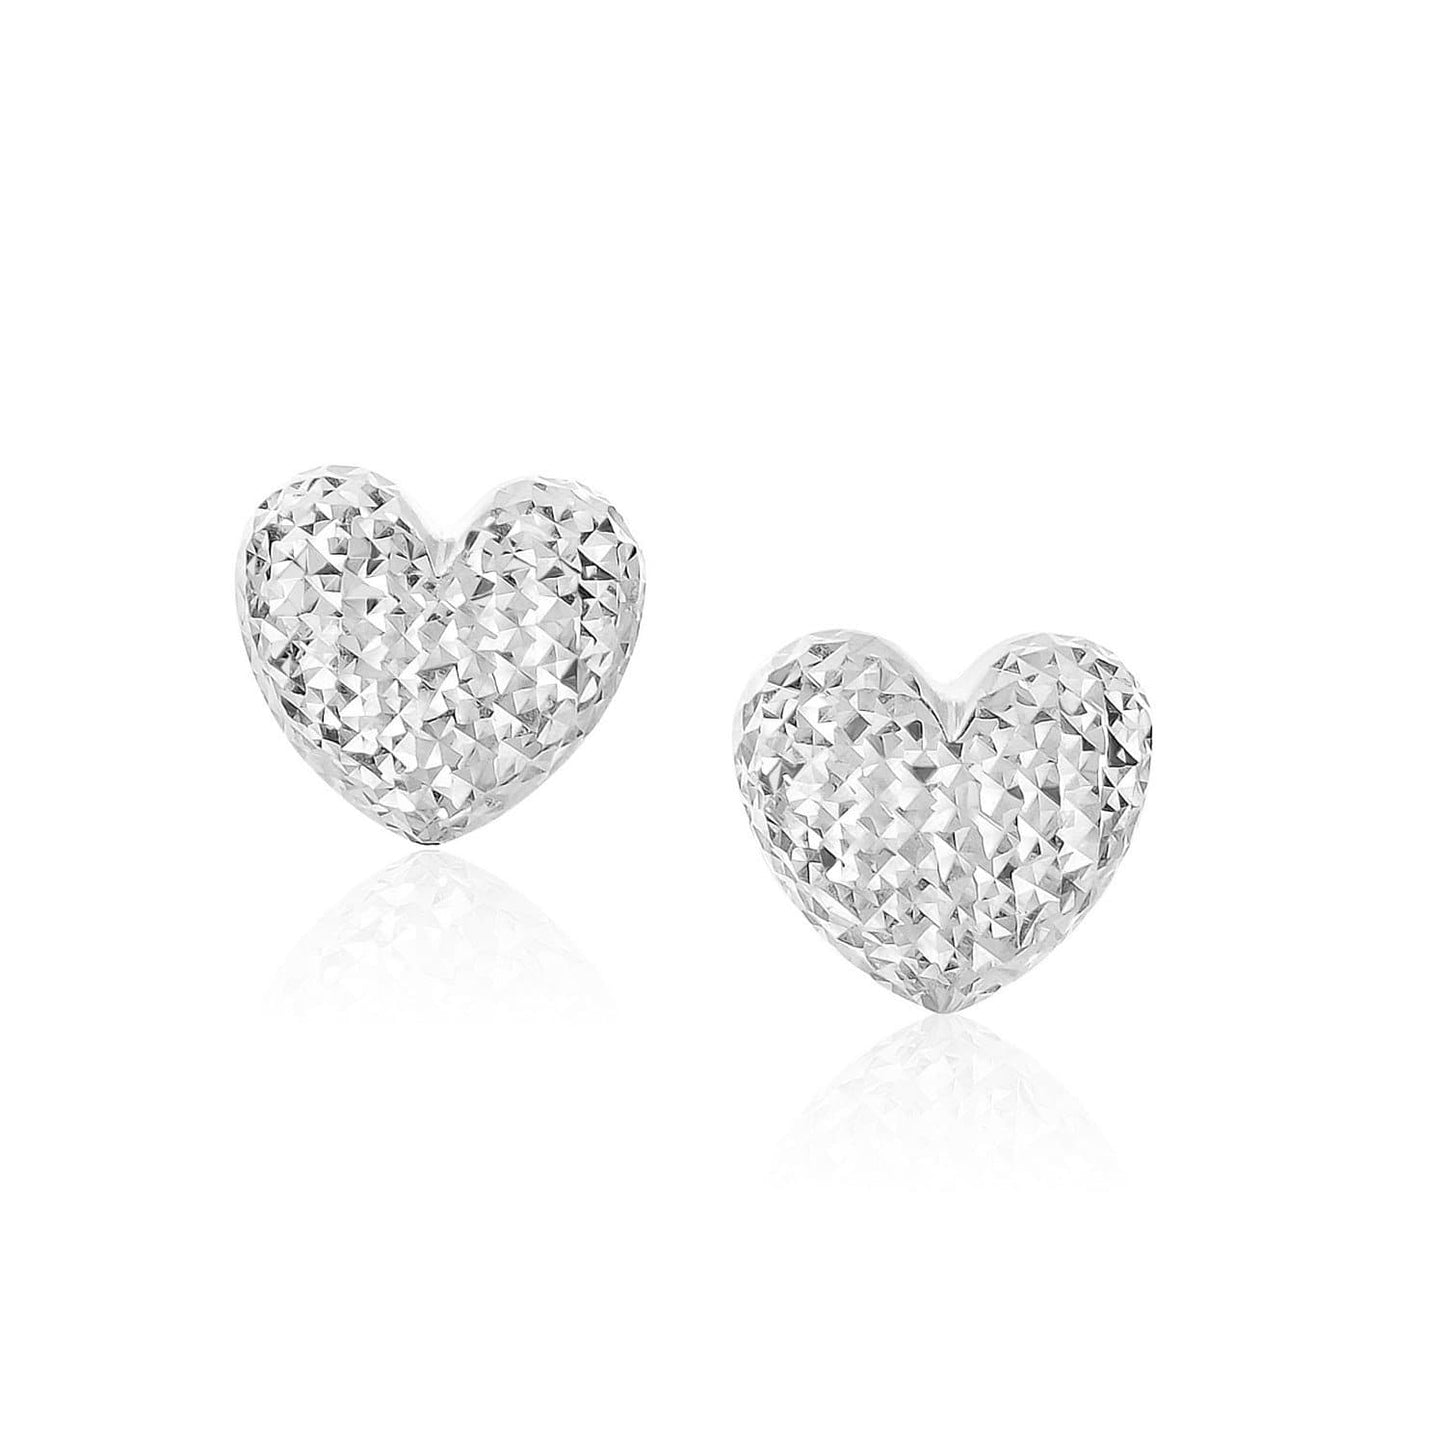 14k White Gold Puffed Heart Earrings with Diamond Cuts